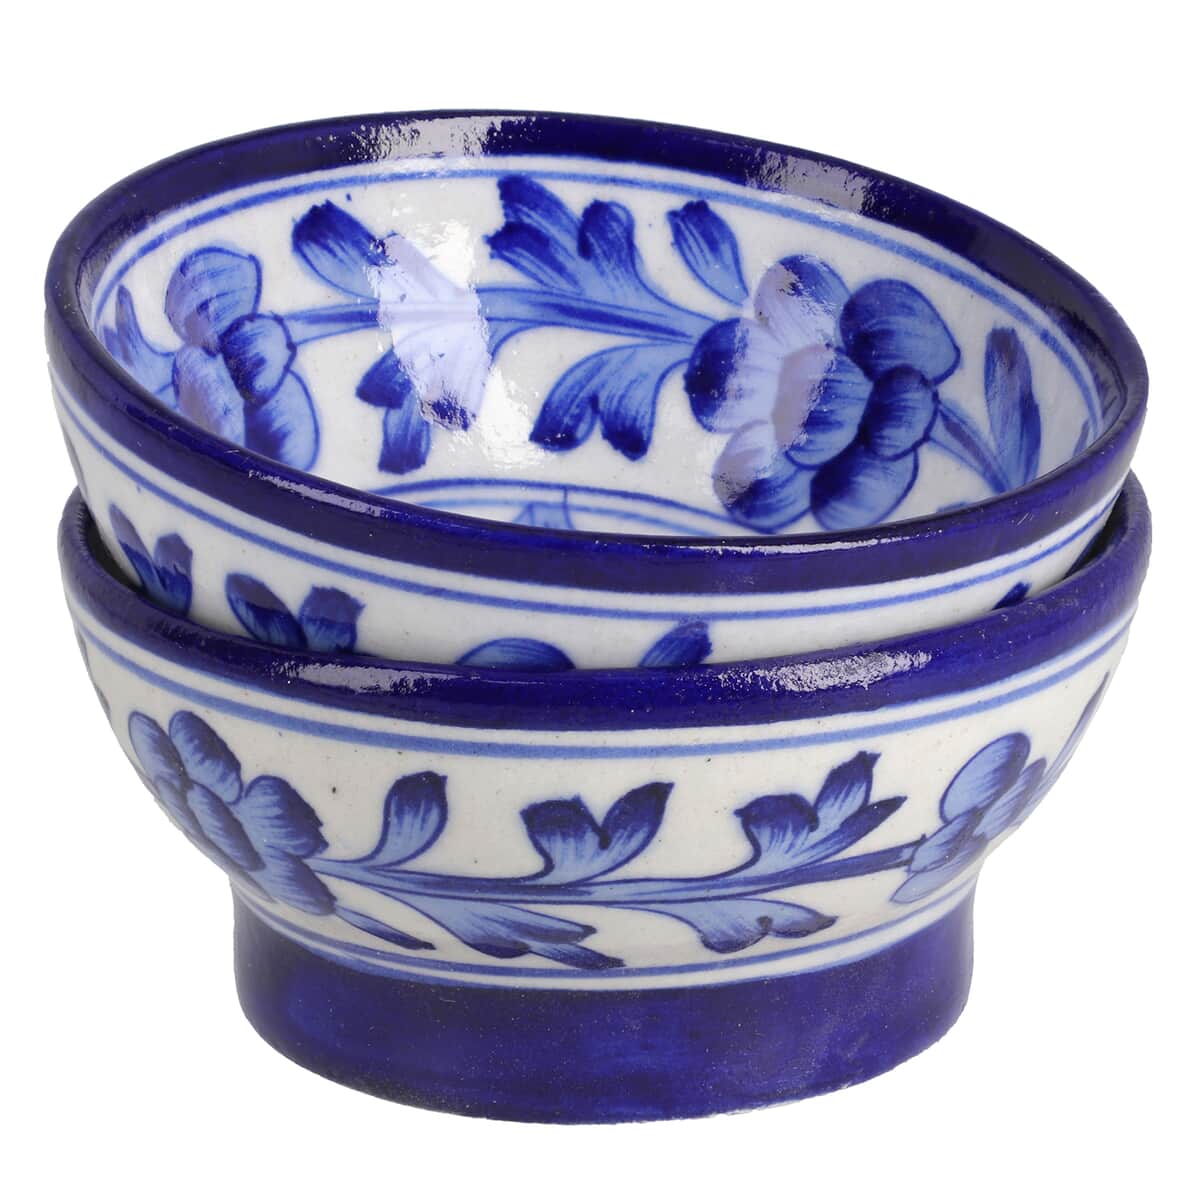 Blue Art Pottery Handmade Blue Floral and Leaf Pattern Crafted Ceramic Bowl - Set of 2 image number 5